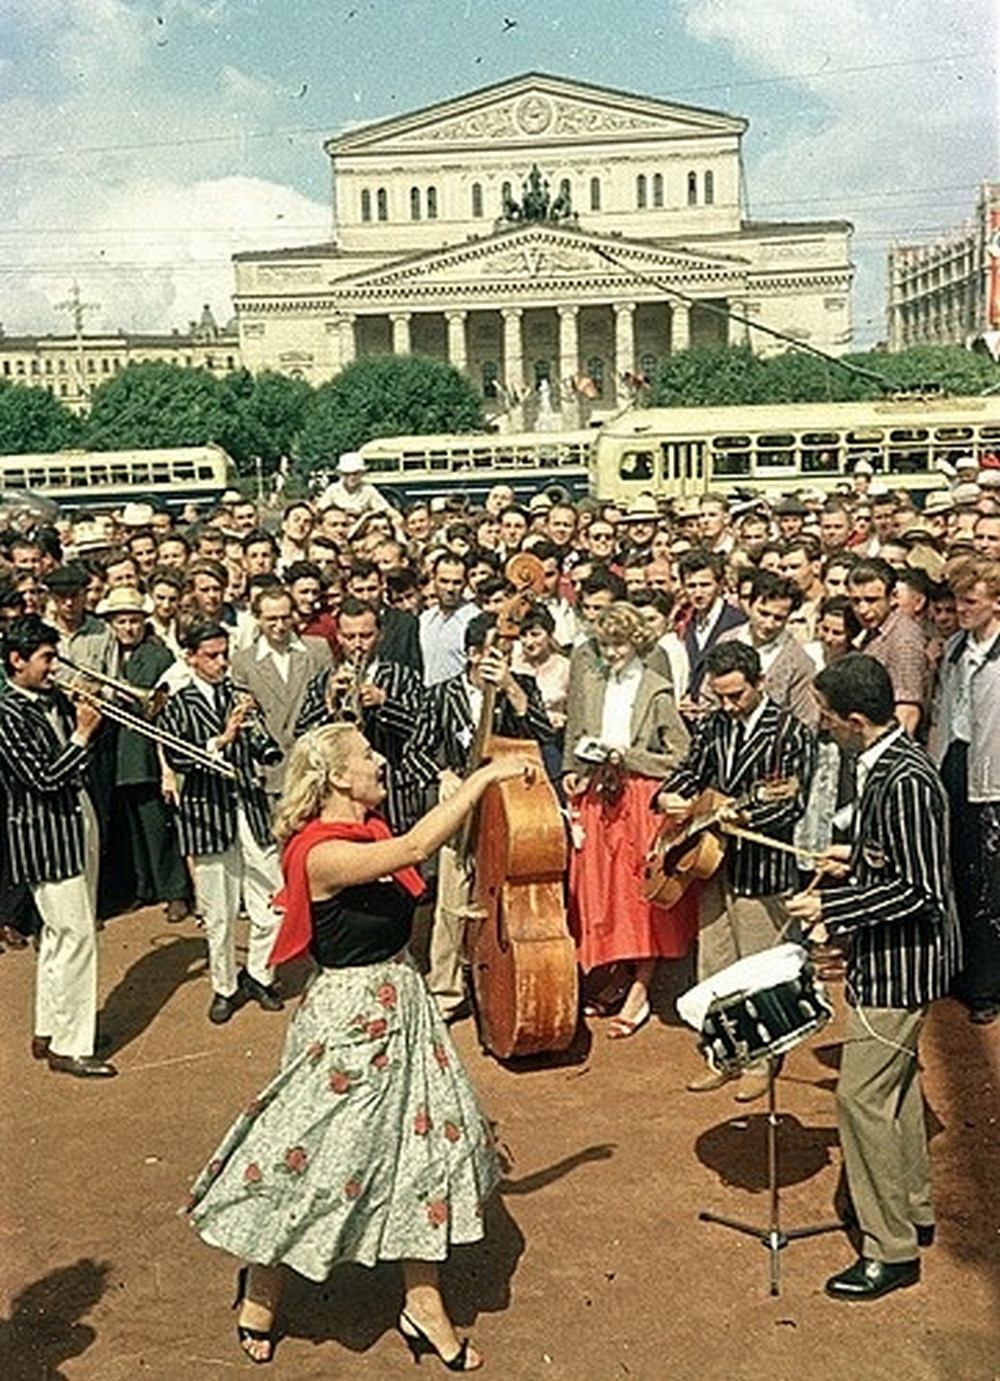 festival molodezhi studentov Moskva 1957.jpg 14